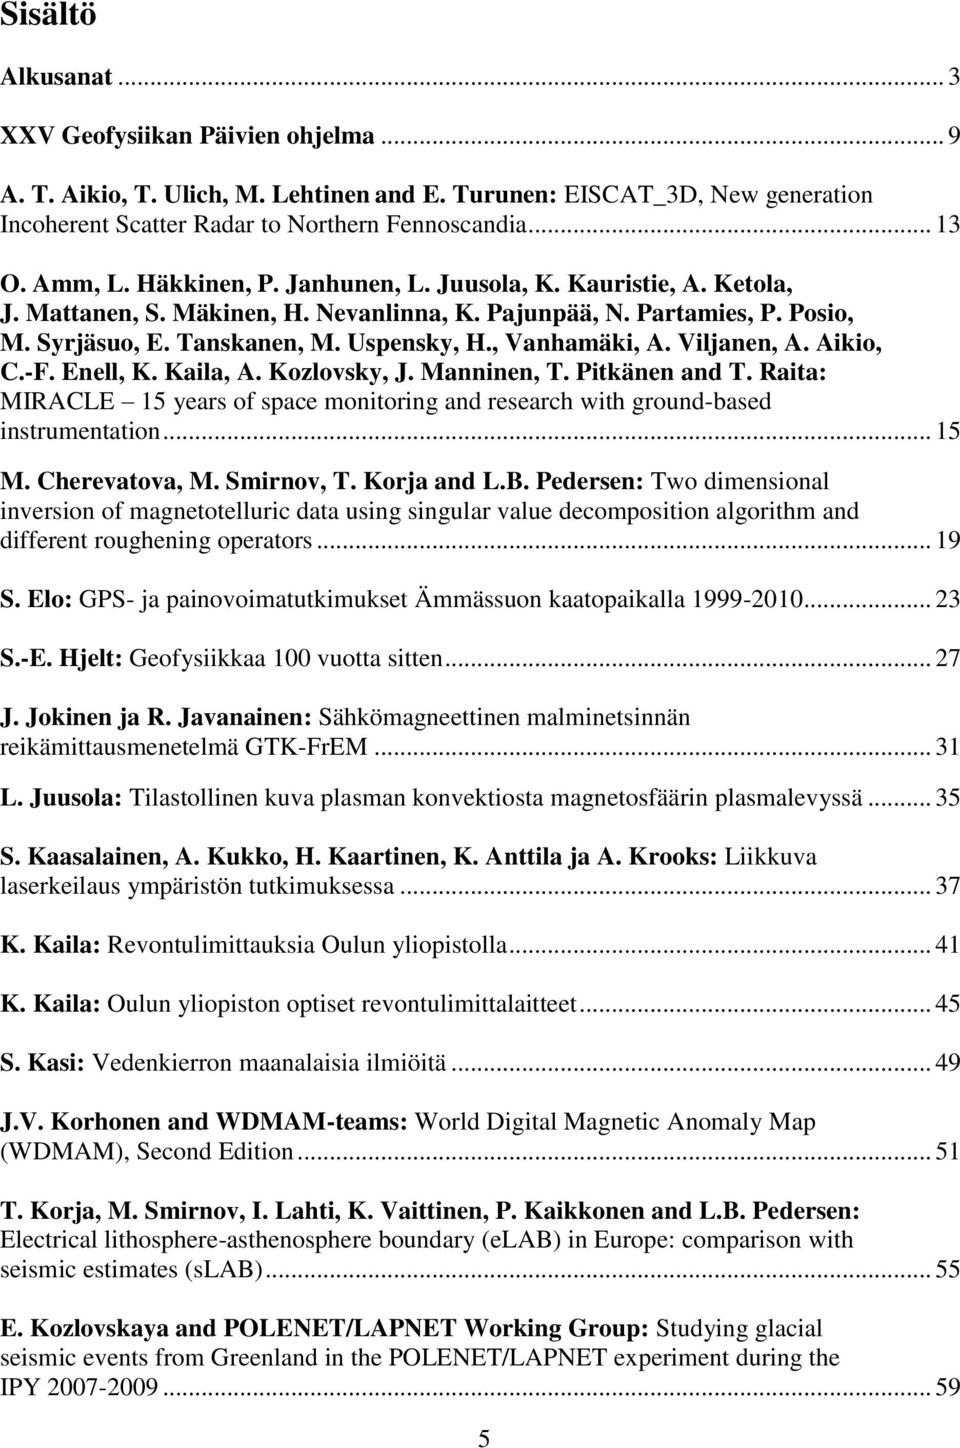 , Vanhamäki, A. Viljanen, A. Aikio, C.-F. Enell, K. Kaila, A. Kozlovsky, J. Manninen, T. Pitkänen and T. Raita: MIRACLE 15 years of space monitoring and research with ground-based instrumentation.